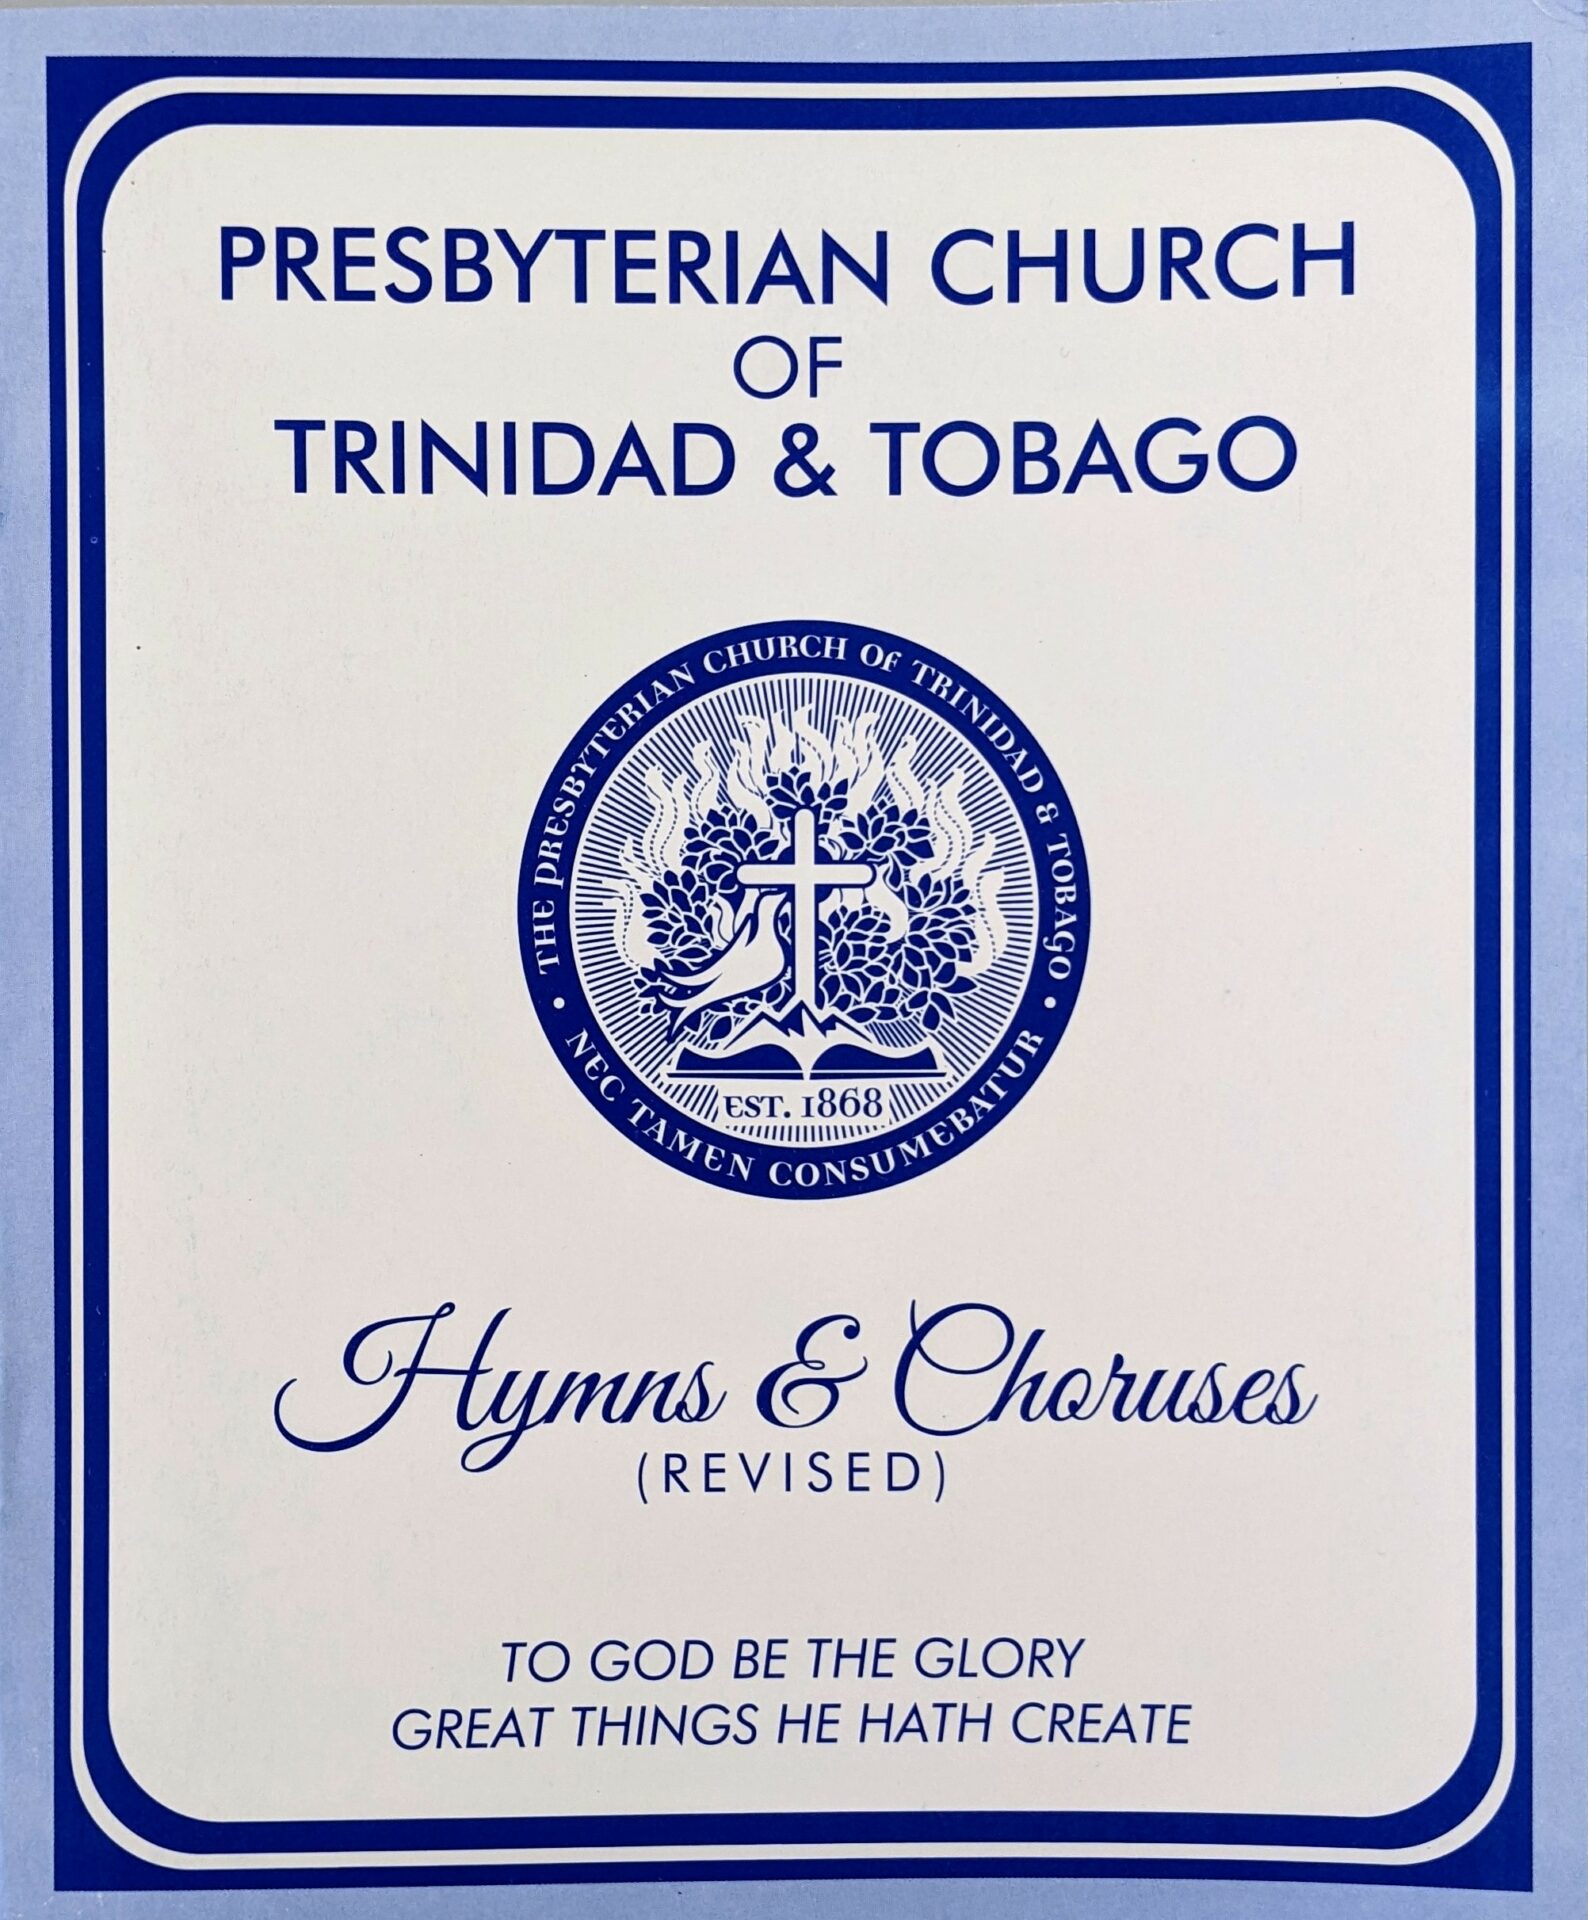 The Presbyterian Church of Trinidad & Tobago: Hymns And Chourses